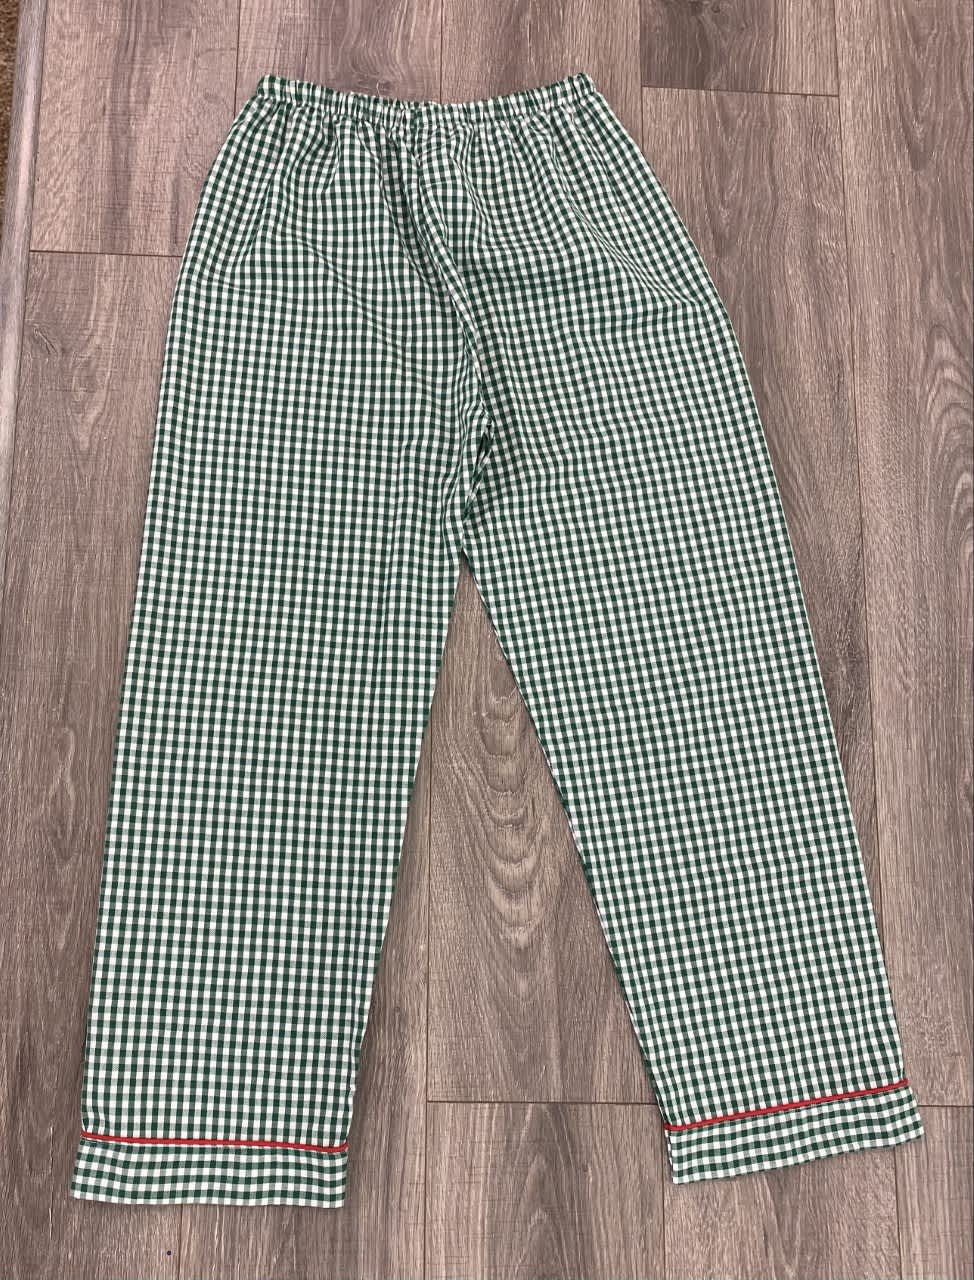 Green Gingham Adult Pants